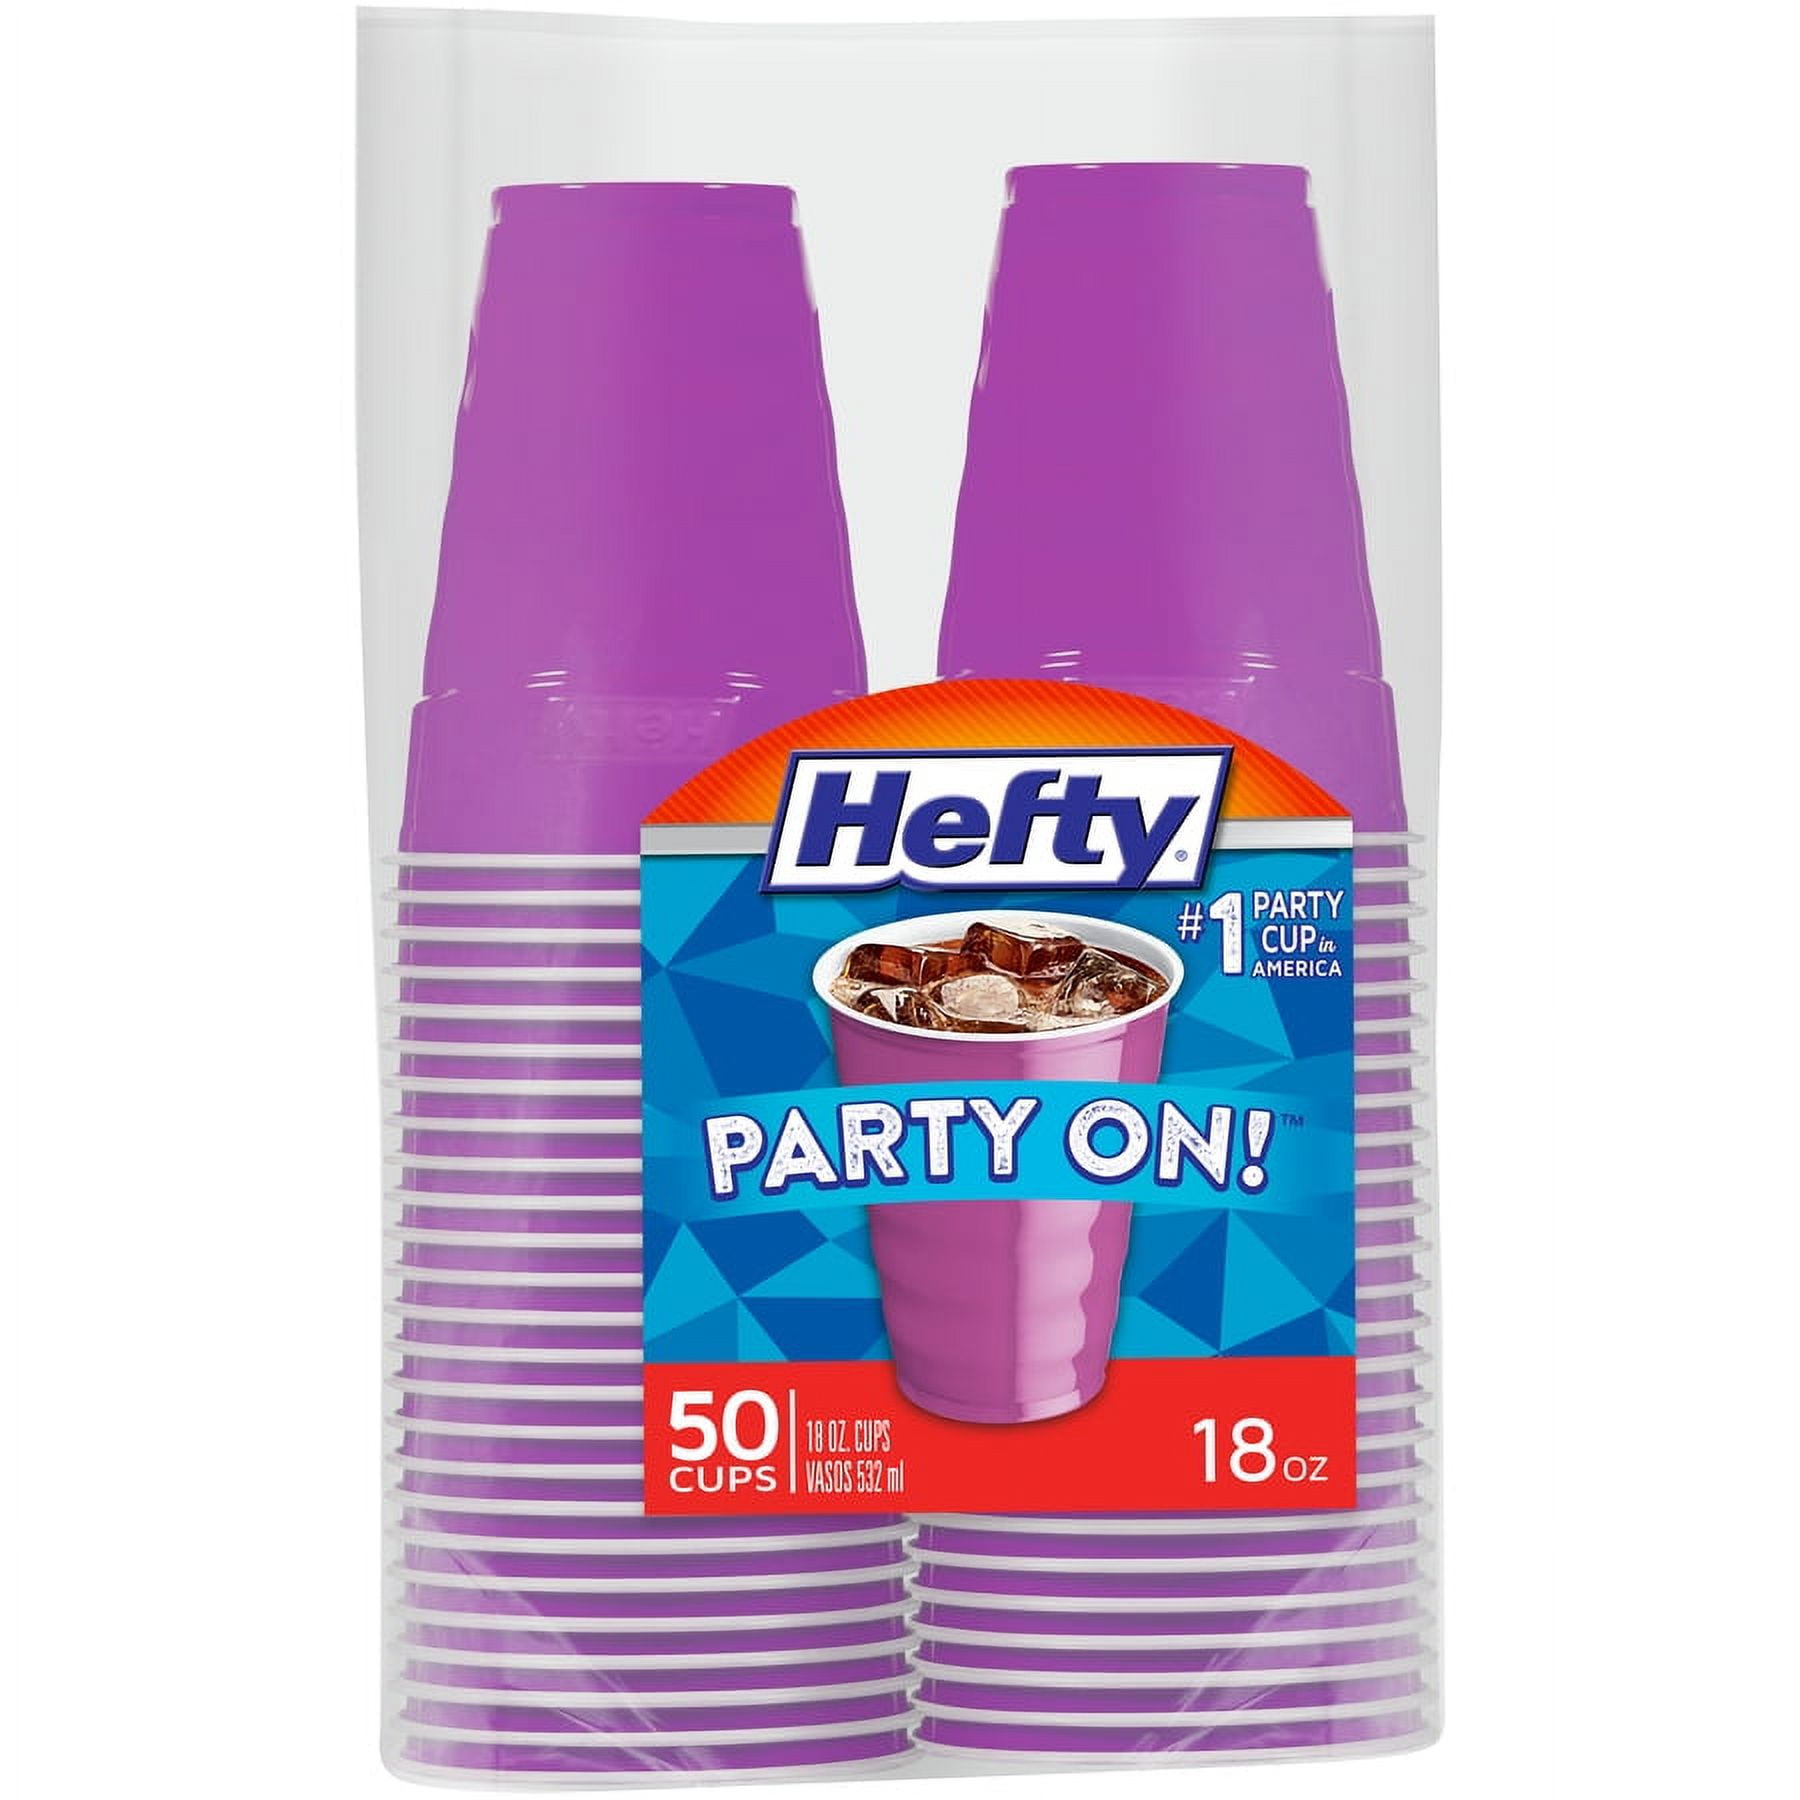 New Purple Plastic Cups, 18 Oz